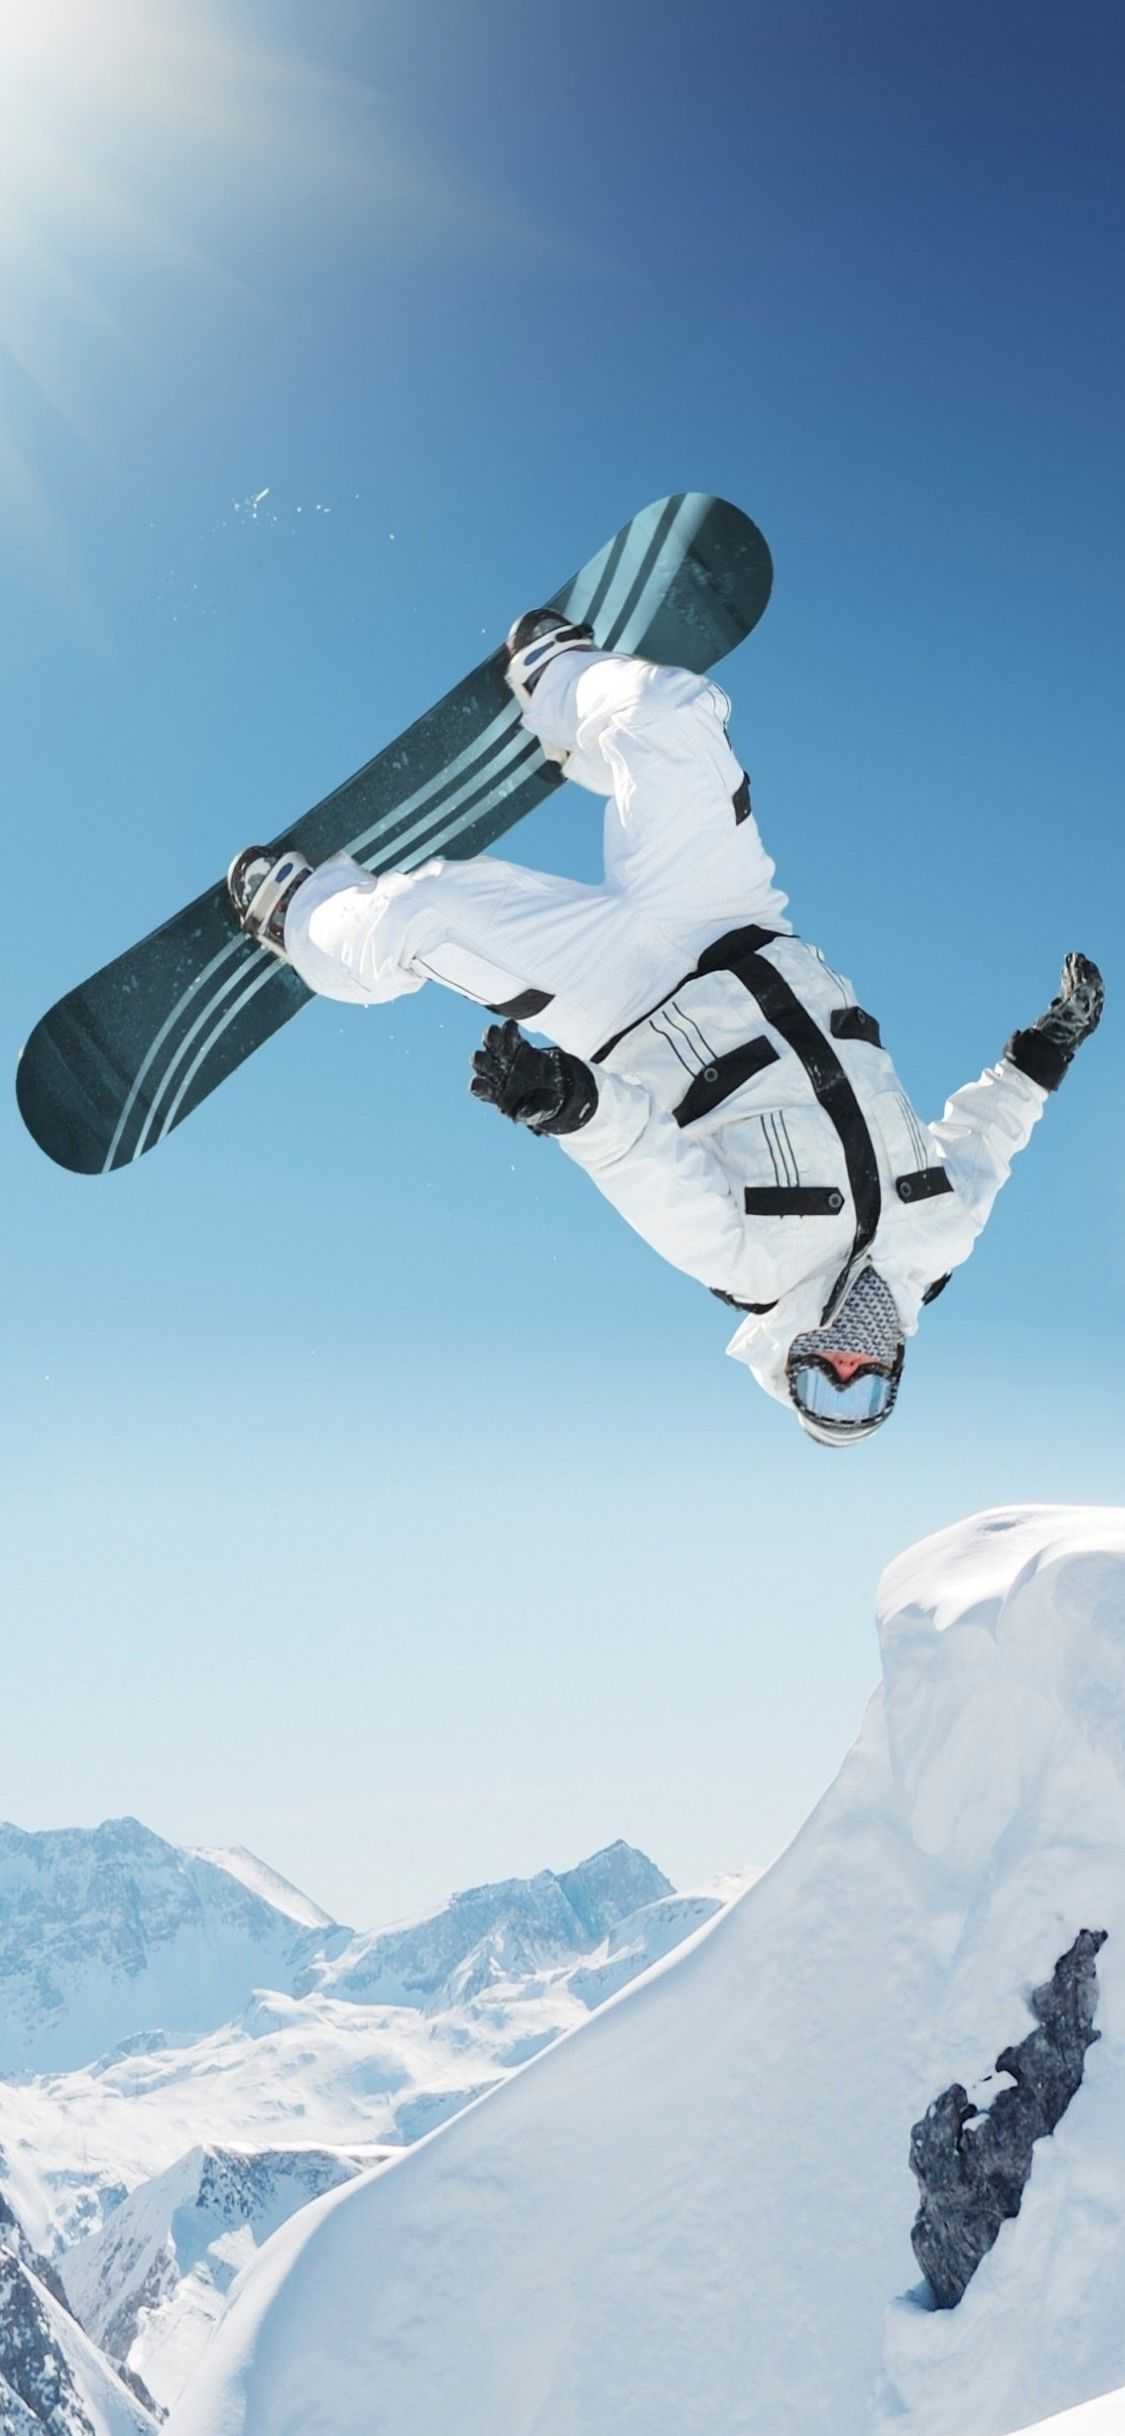 Snowboarding: Backflip trick in the air, Extreme alpine snowboarding, Winter performance sport. 1130x2440 HD Wallpaper.